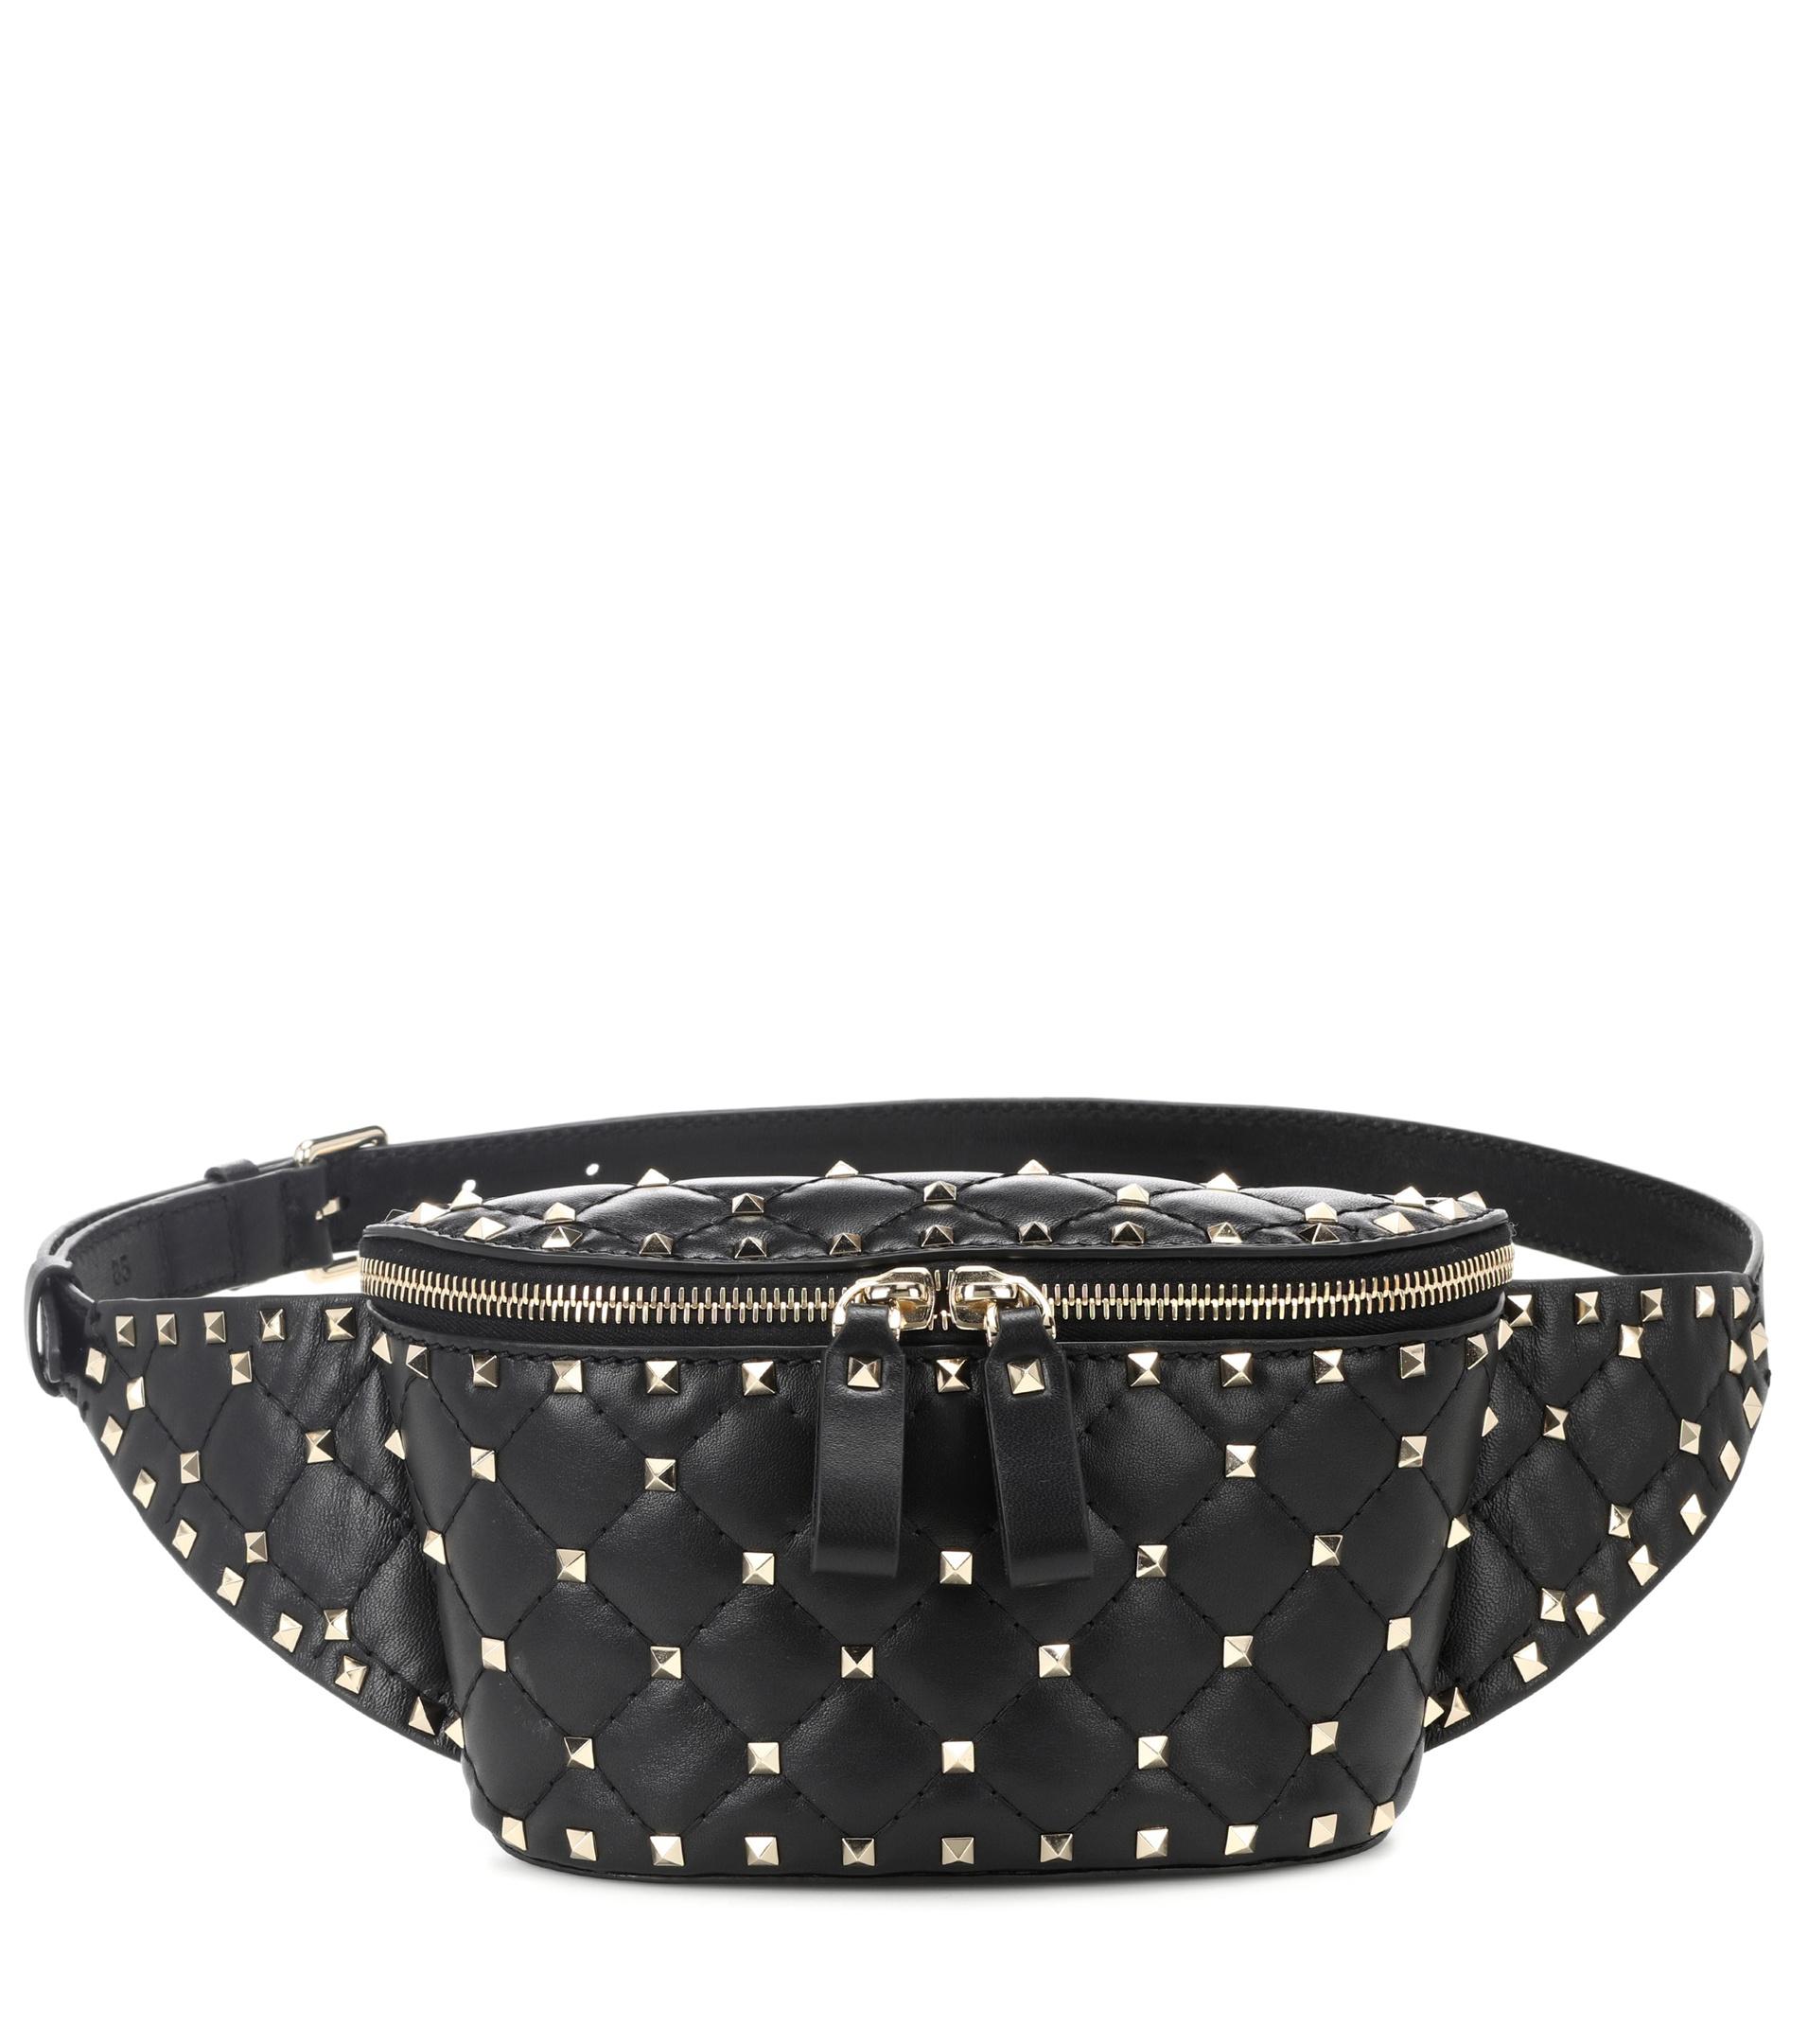 Valentino Rockstud Spike Leather Belt Bag in Black - Lyst